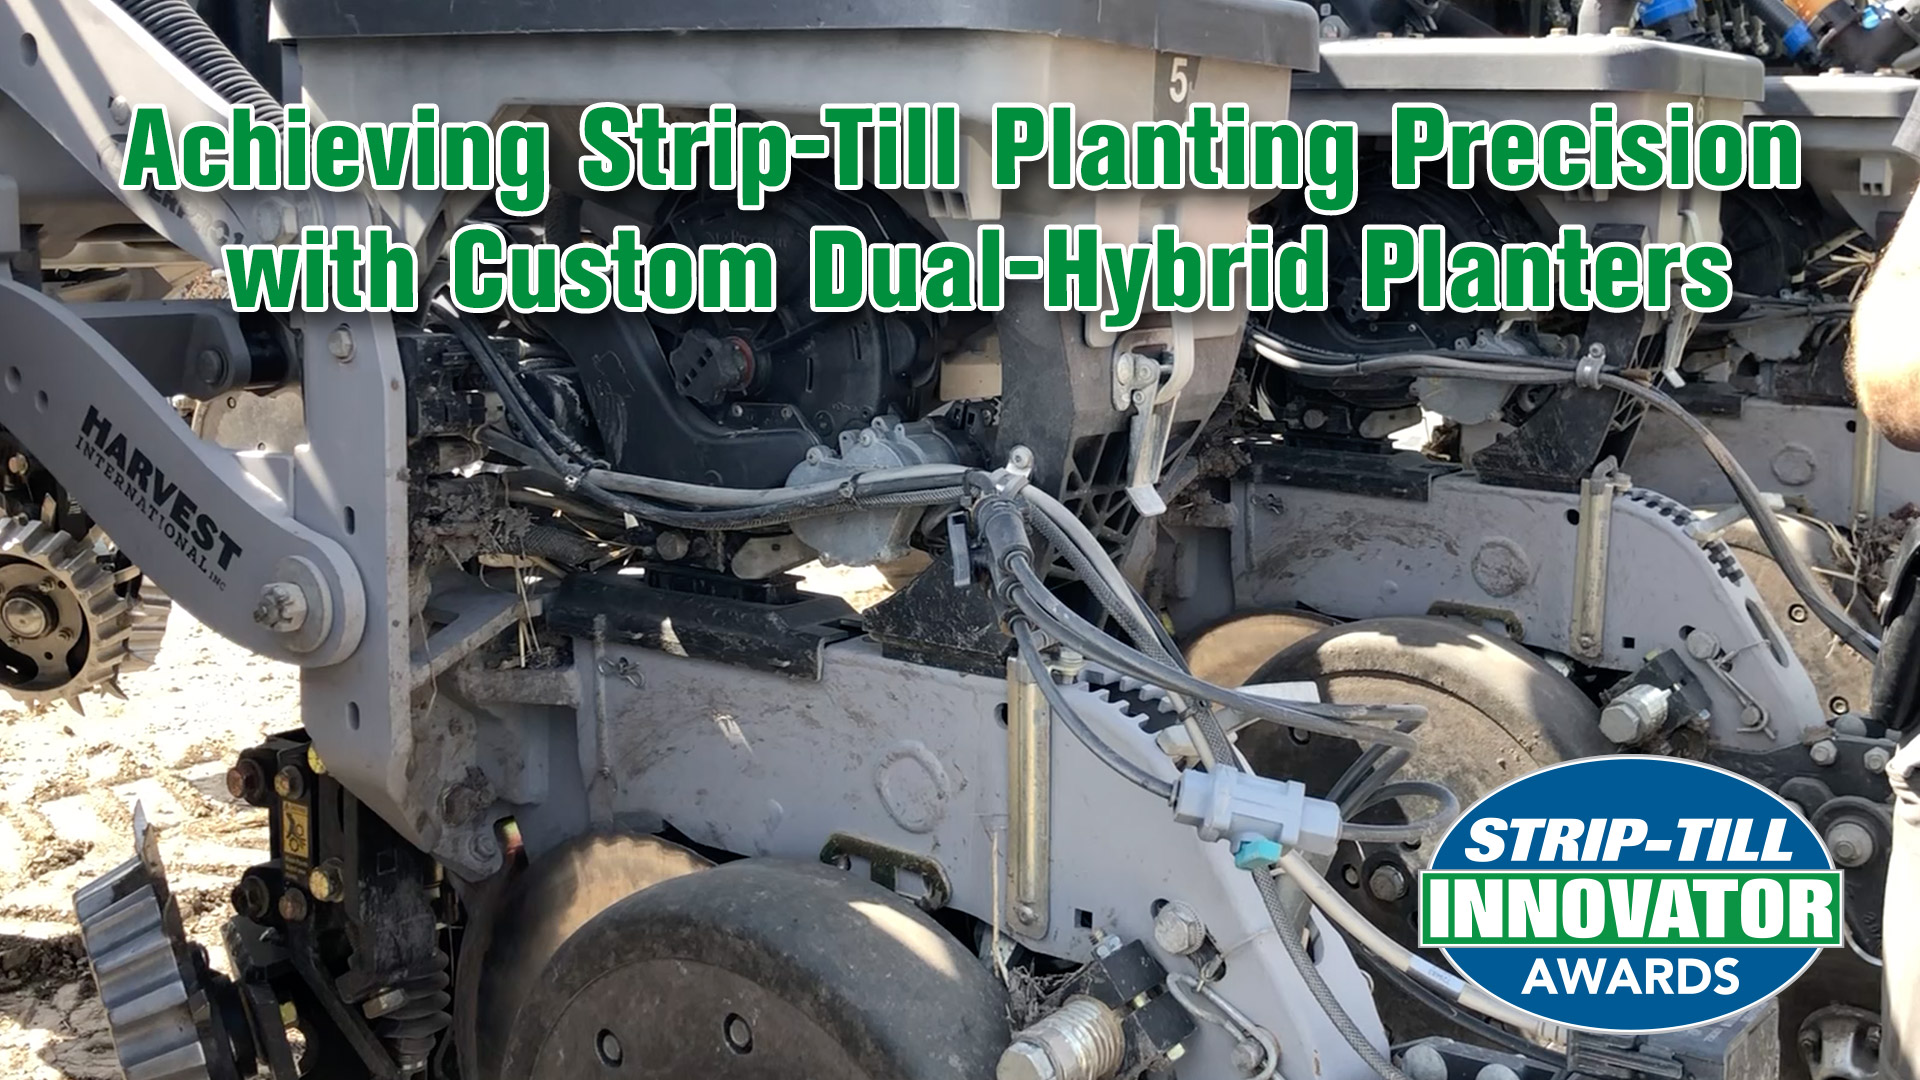 Achieving-Strip-Till-Planting-Precision-with-Custom-Dual-Hybrid-Planters.jpg